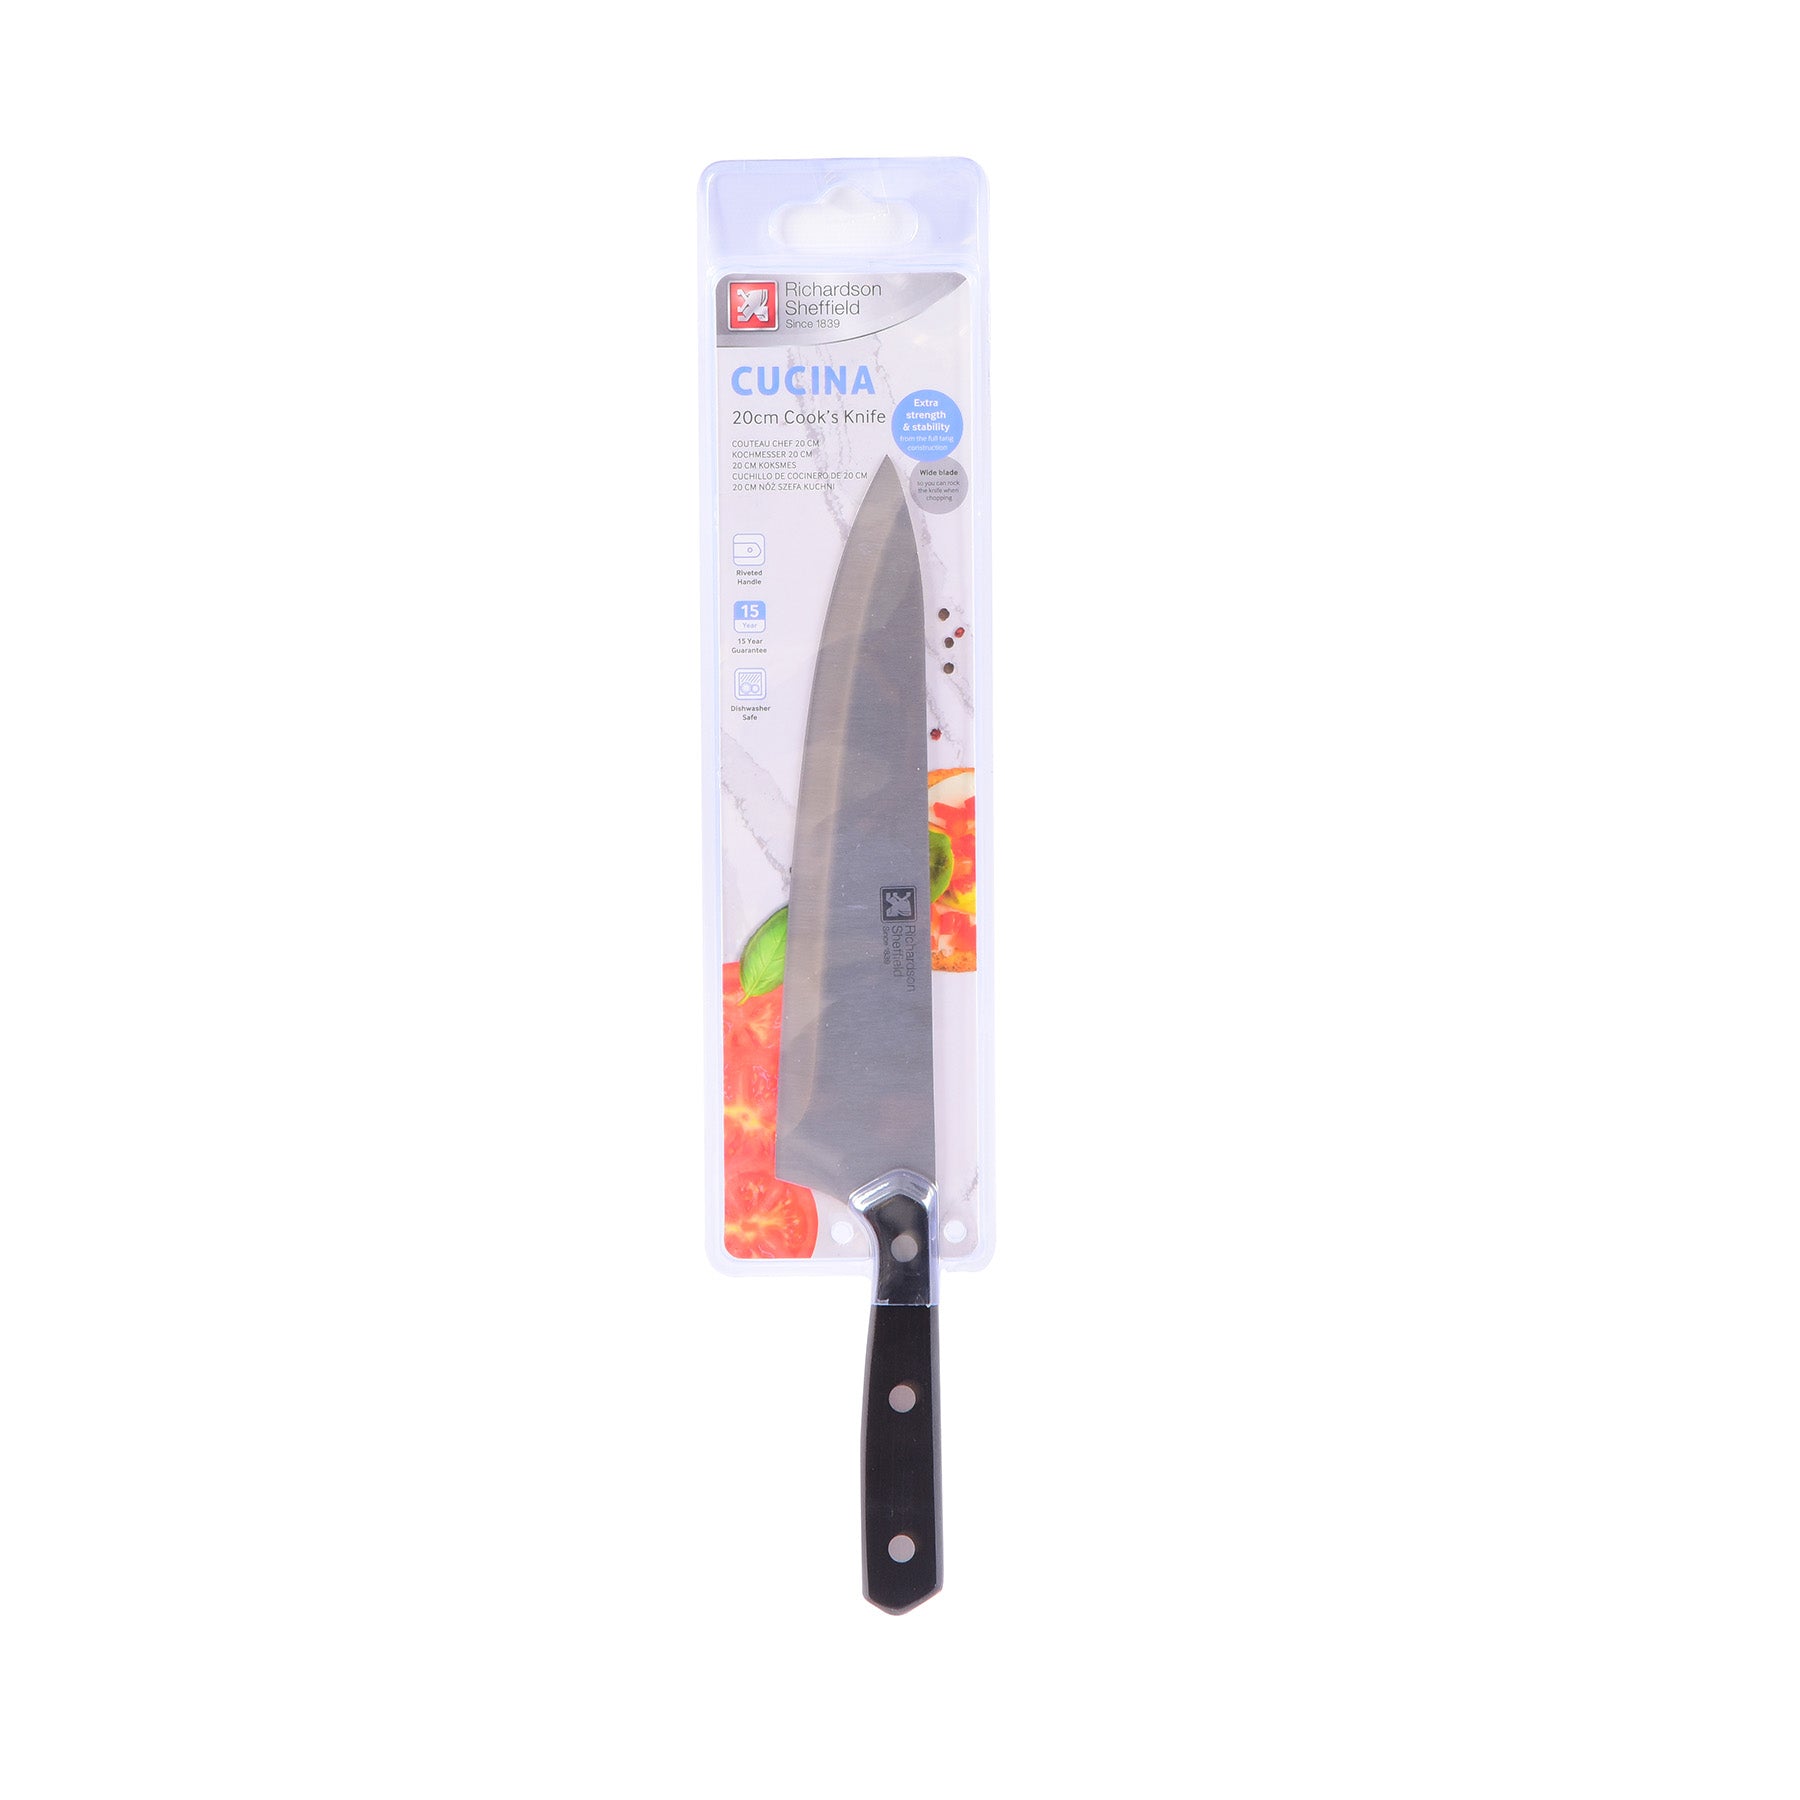 Cook Knife - Silver & black colorSize: 20 cm